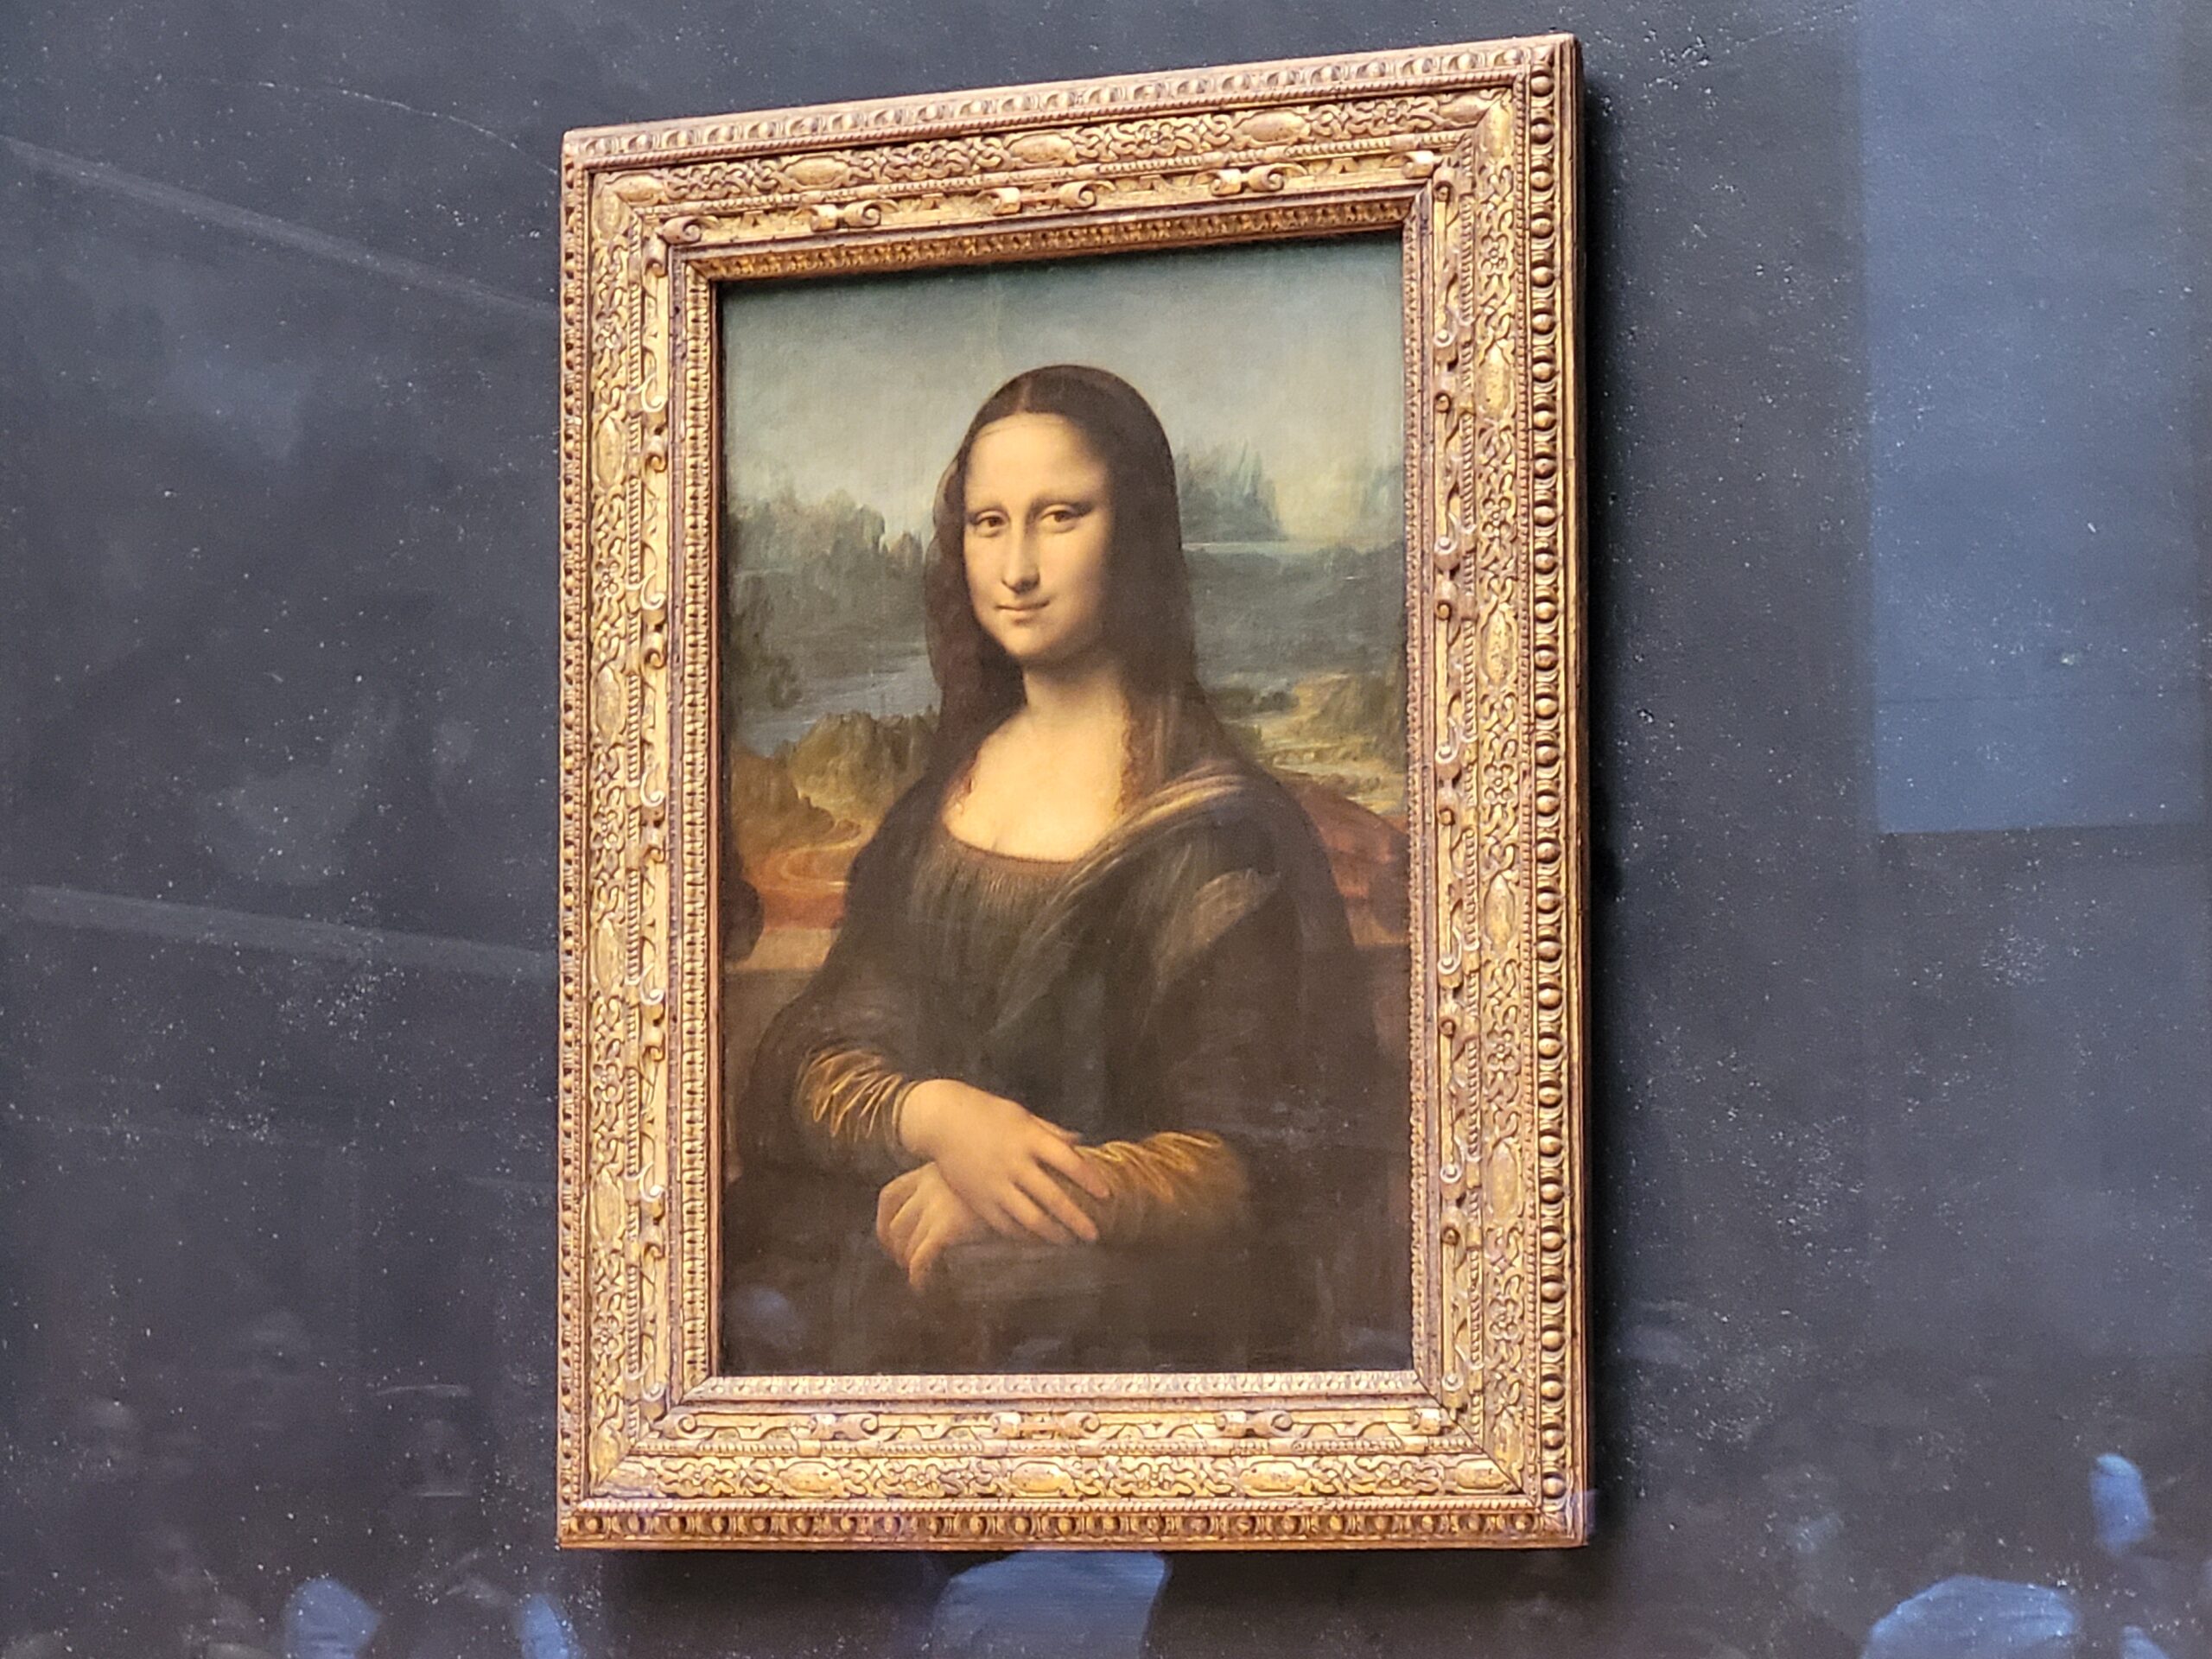 Mona Lisa - Da Vinci - Louvre, Paris